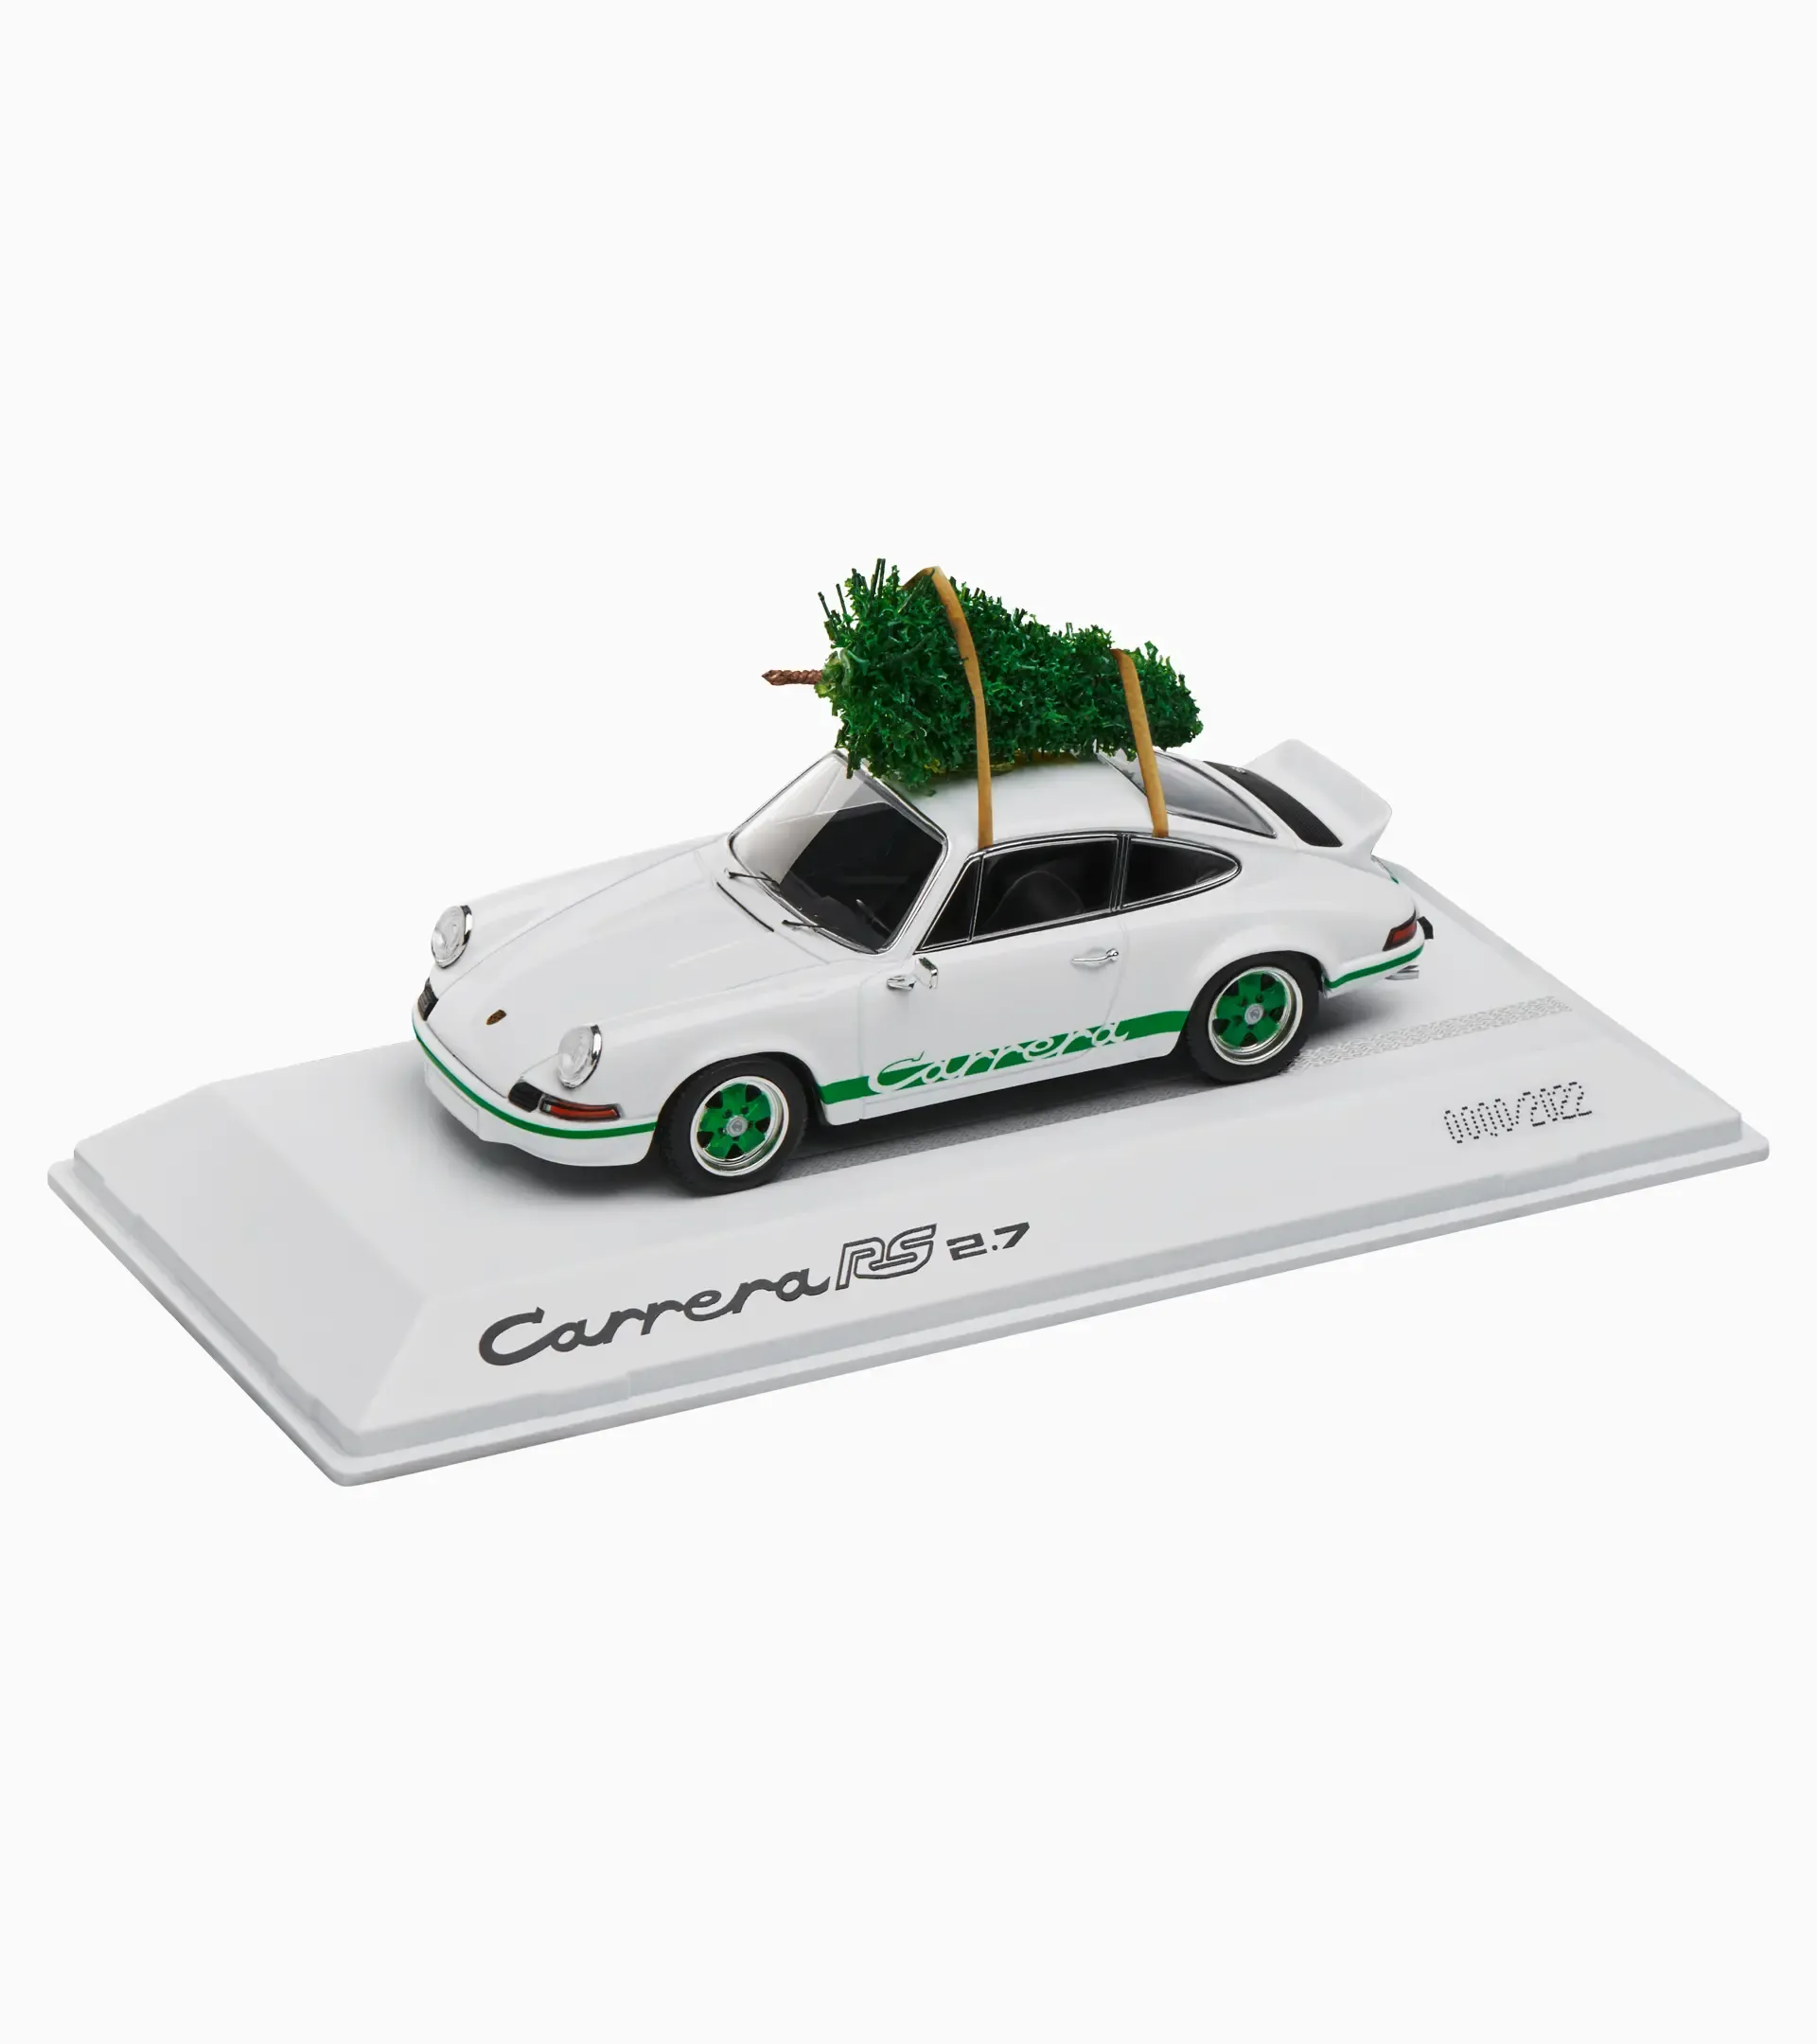 Porsche 911 Carrera RS 2.7 Christmas – Ltd. Edition